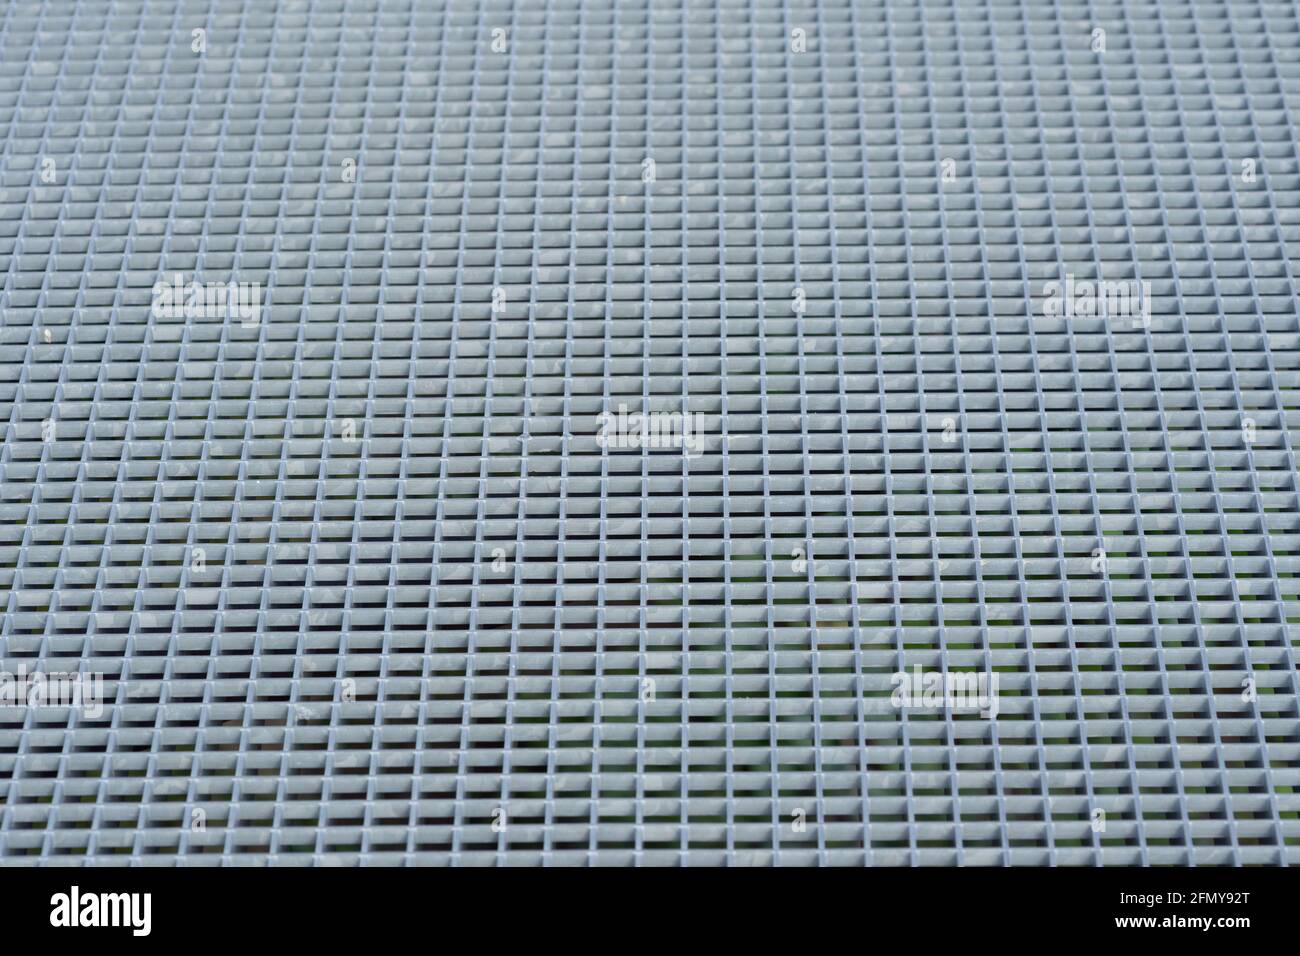 Closeup of a metal grid Stock Photo